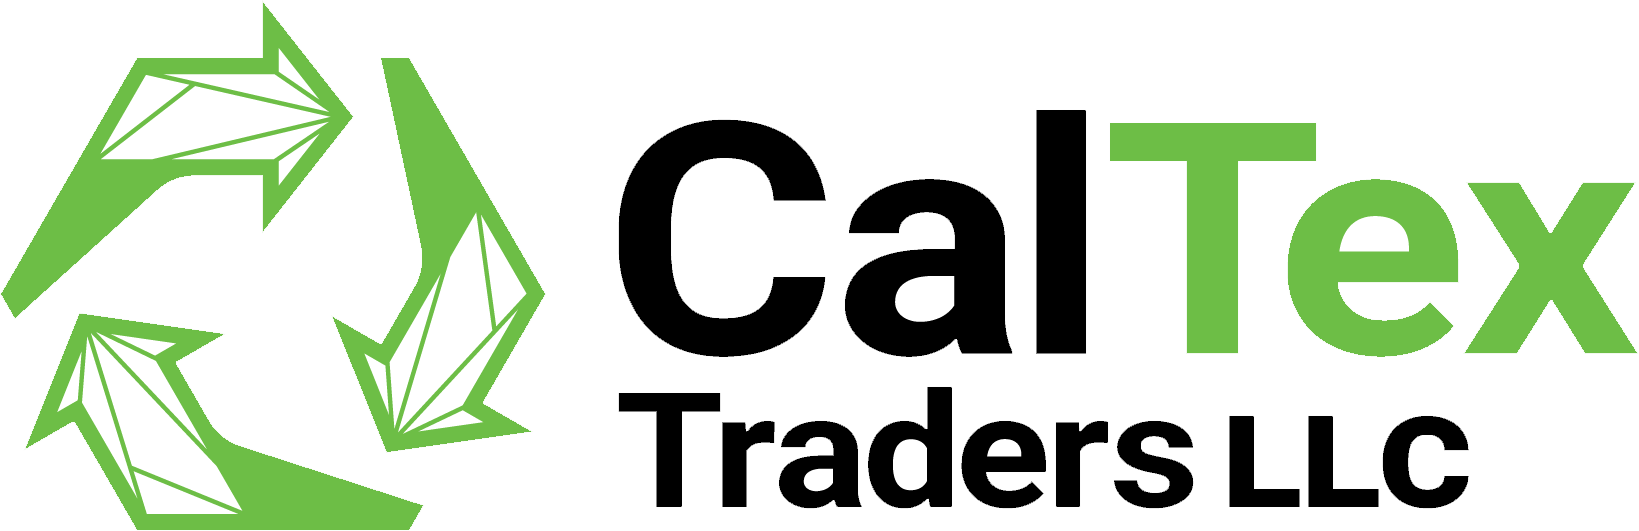 Caltex traders logo